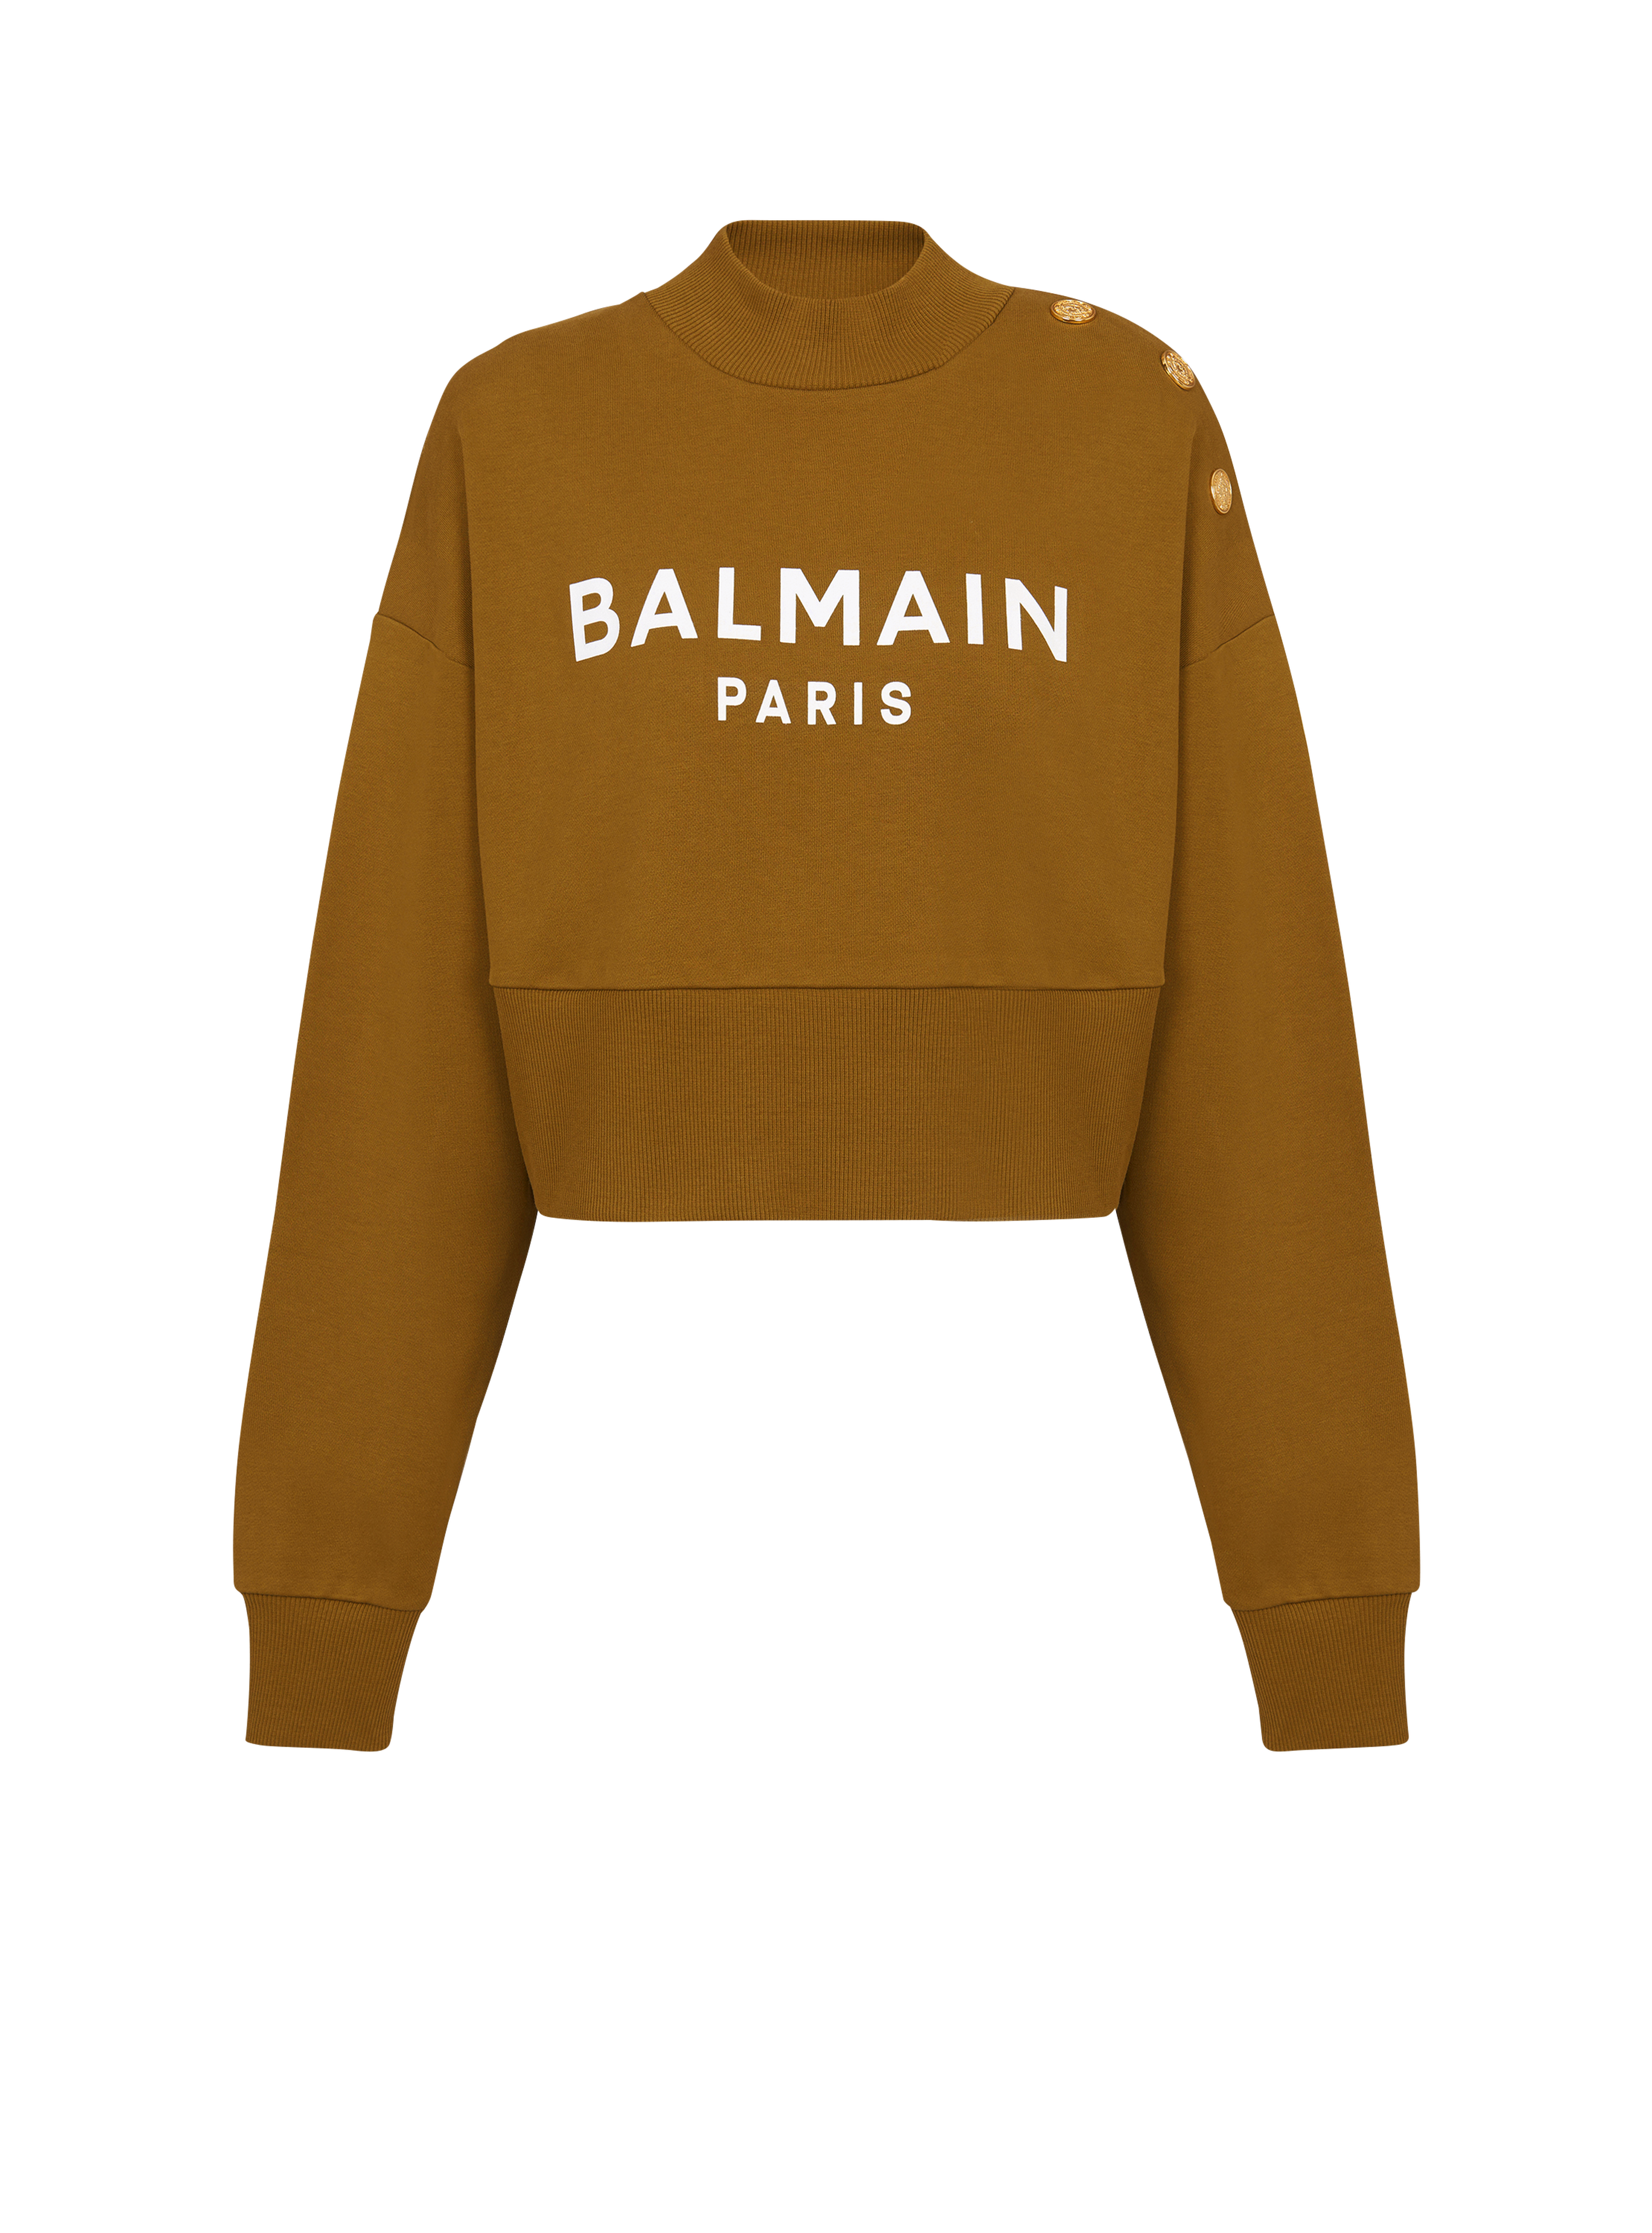 Balmain巴尔曼标志印花短款环保设计棉质运动衫, khaki